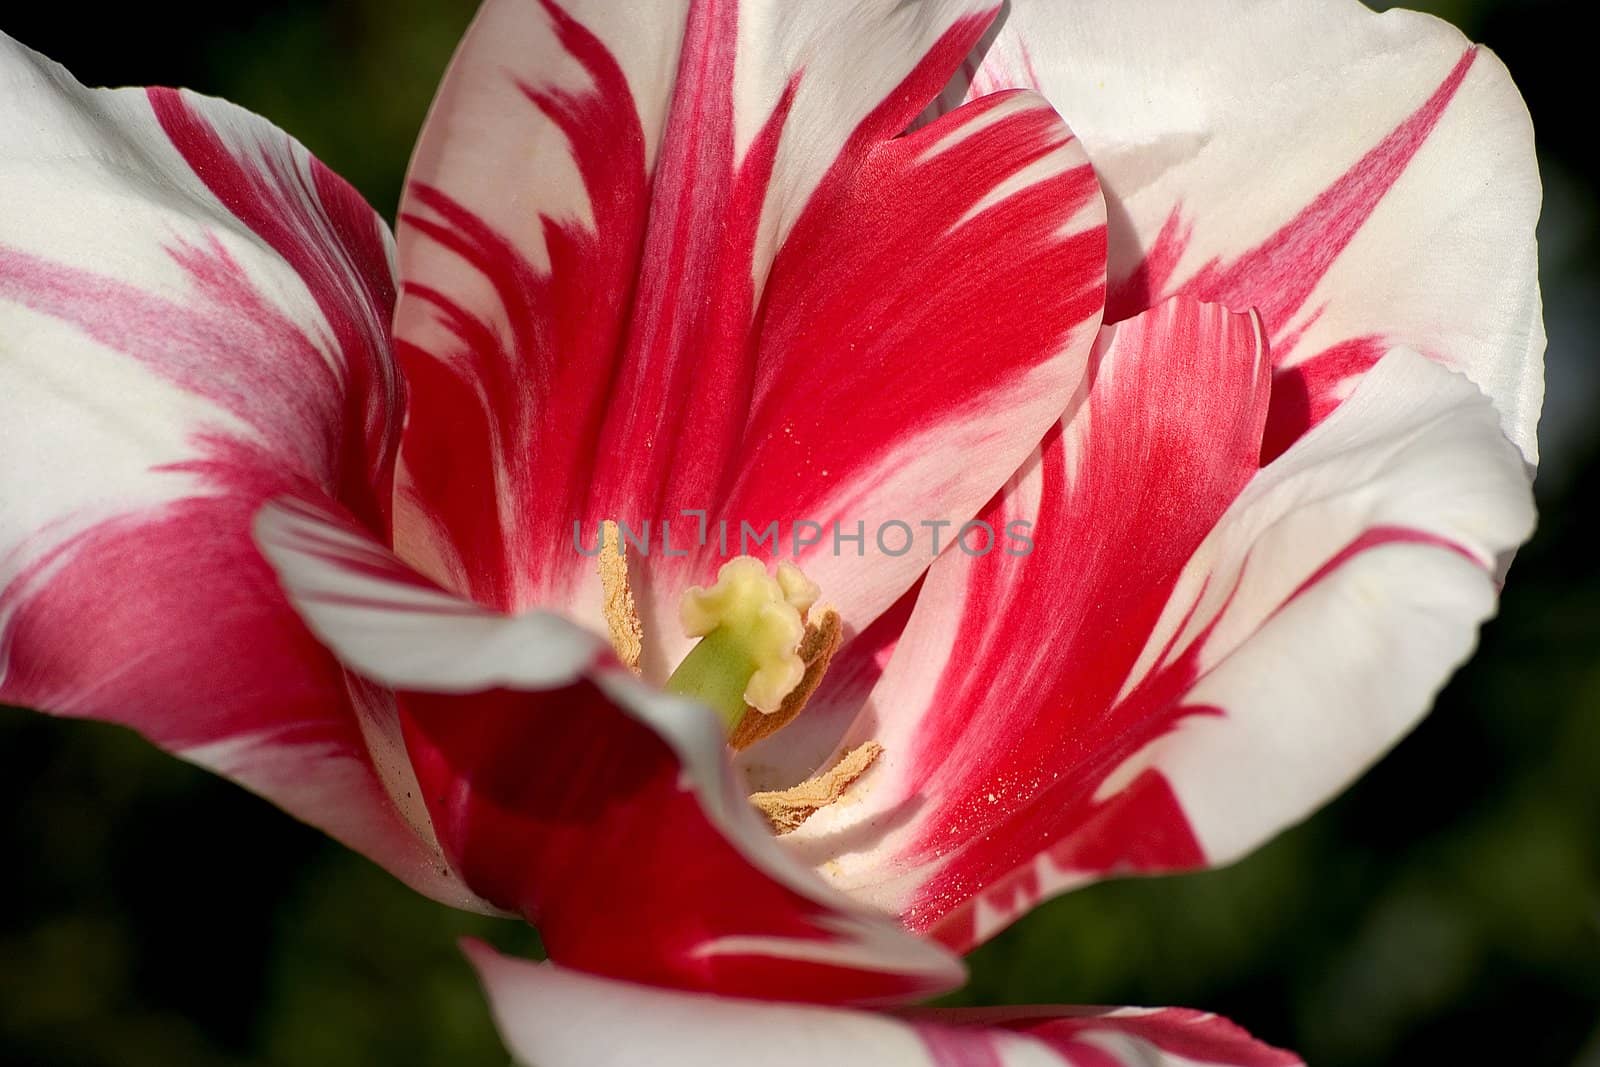 Macro
colored beautiful tulip
red
